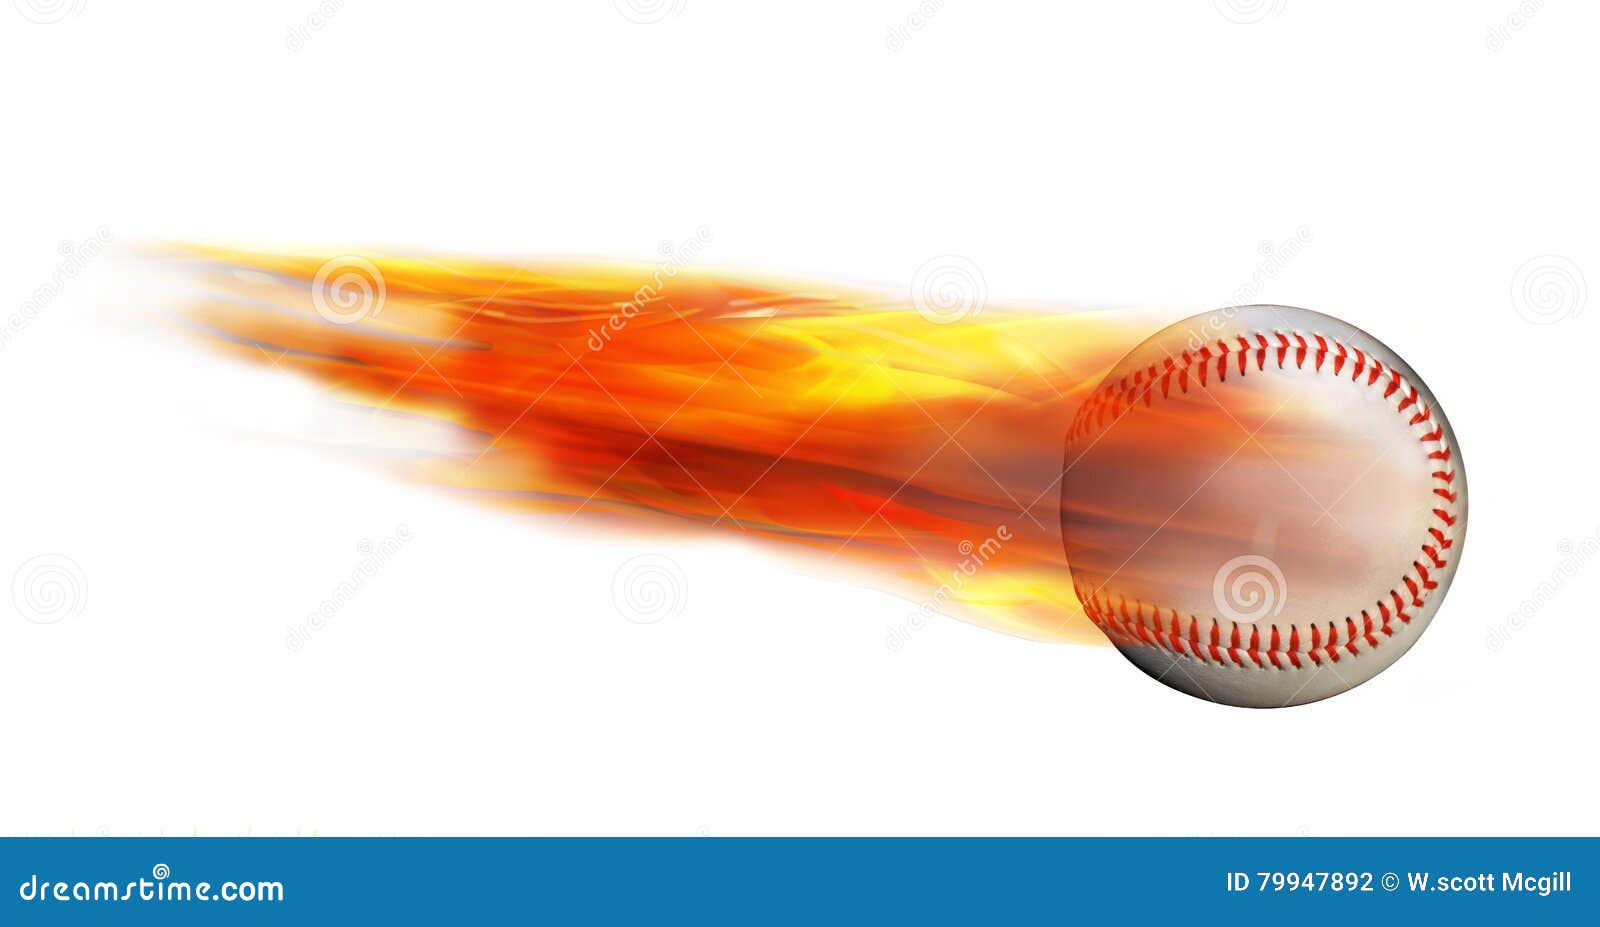 baseball on fire.